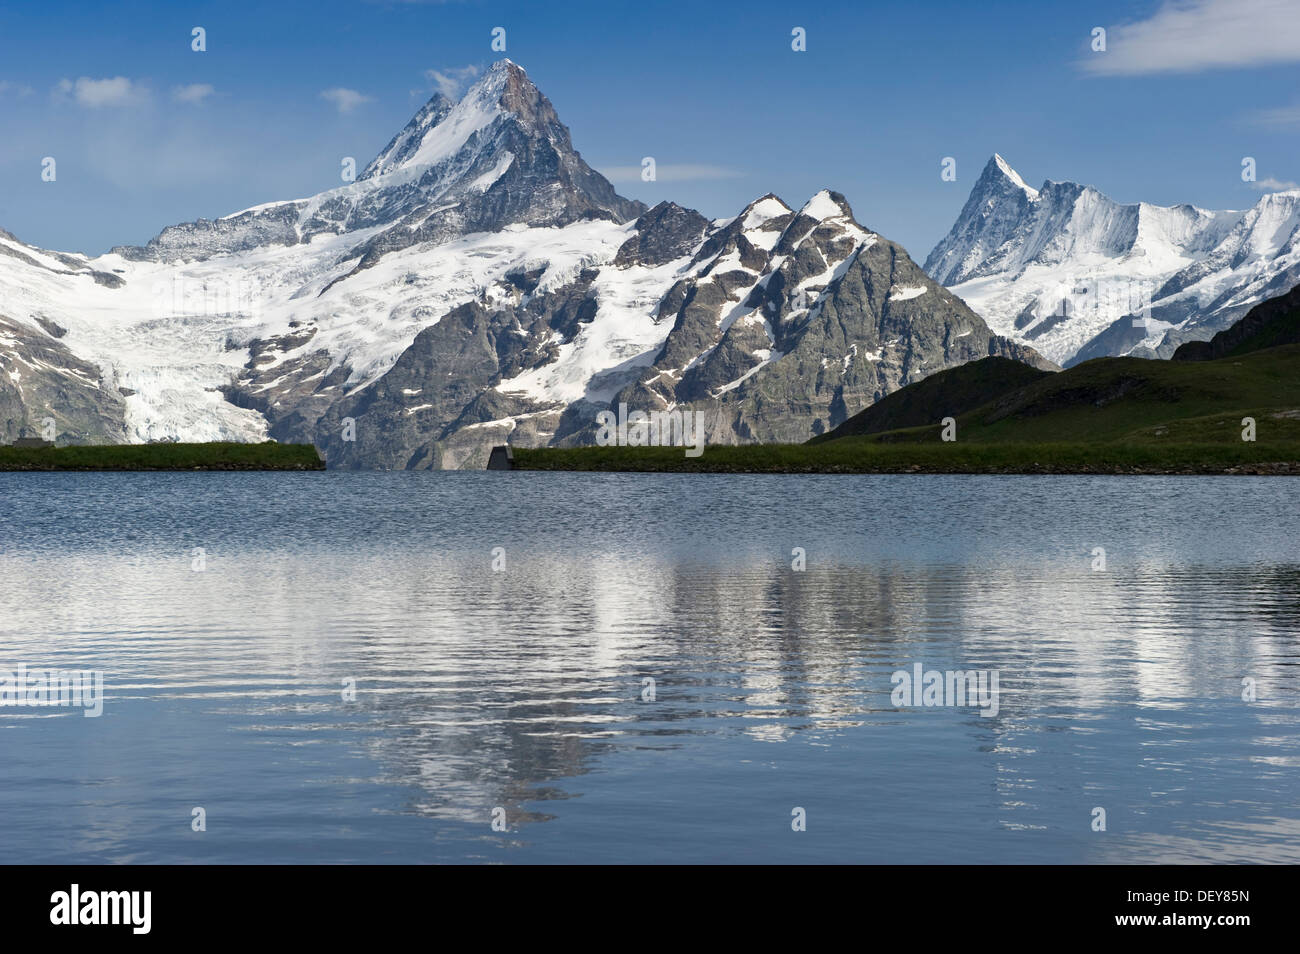 Bachalpsee lago vicino a Grindelwald, montagna Faulhorn e Finsteraarhorn sul retro, Oberland bernese, il Cantone di Berna, Svizzera Foto Stock